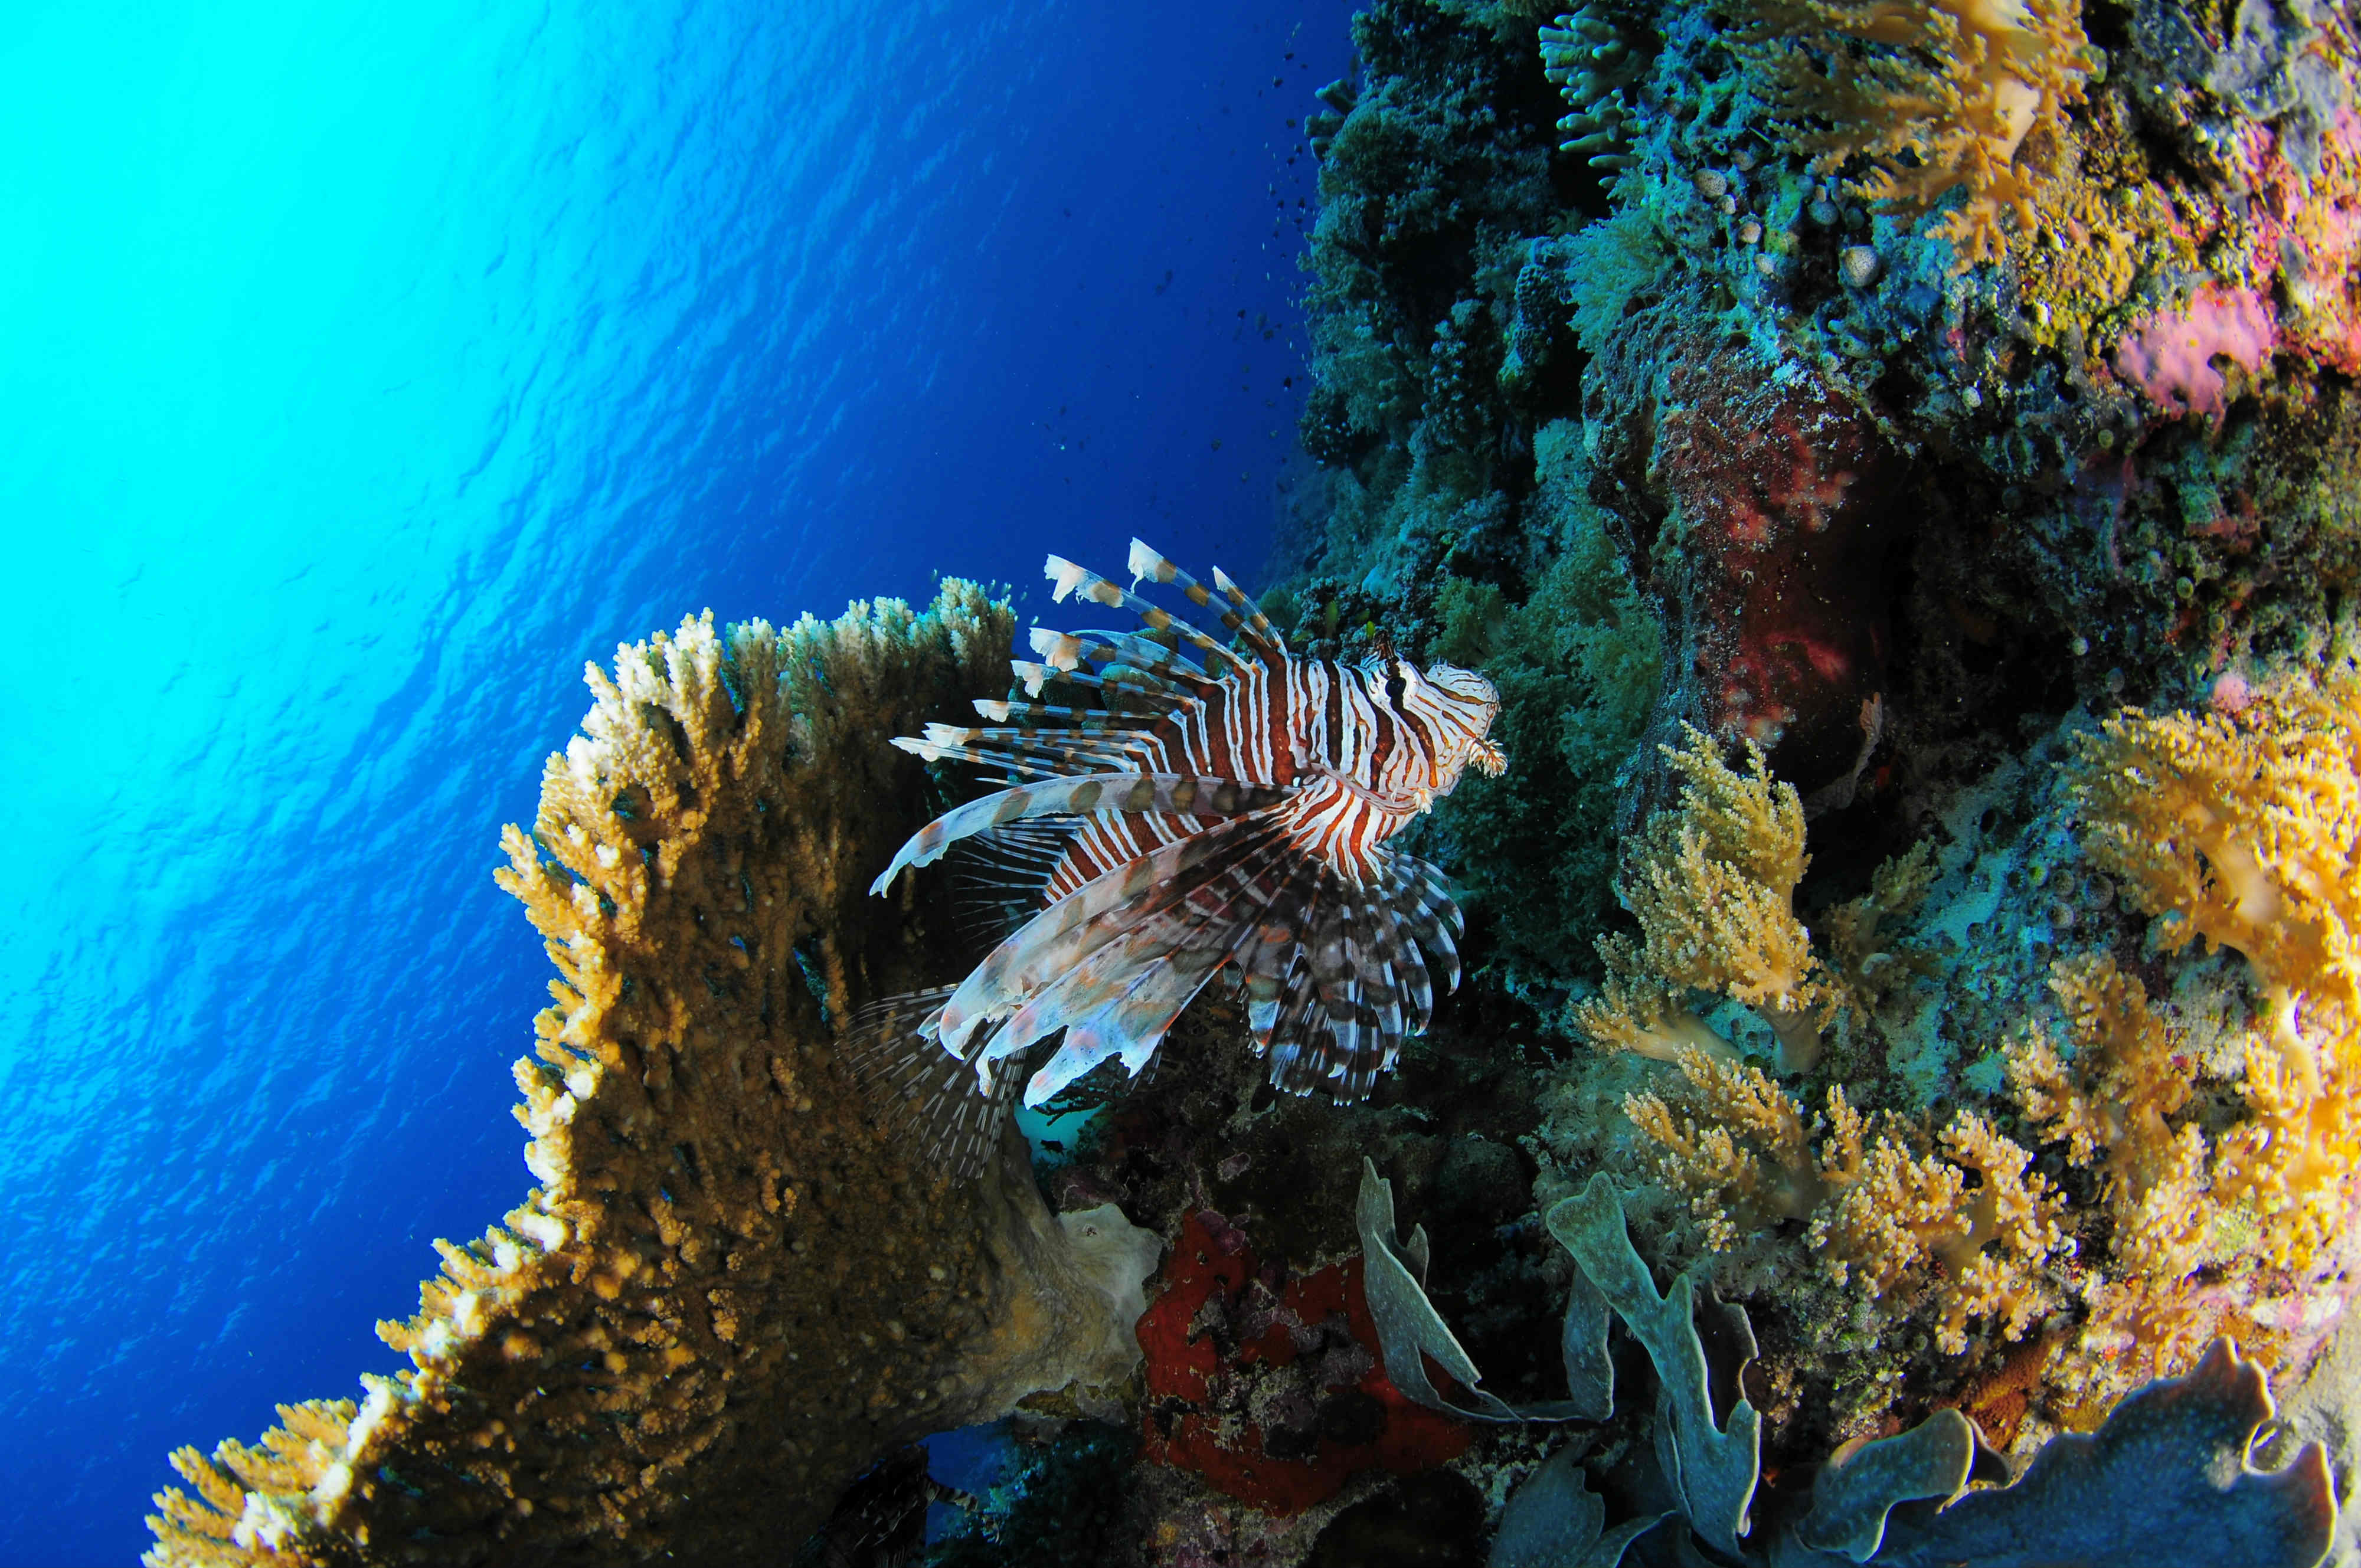 Coral Reef HD Wallpaper